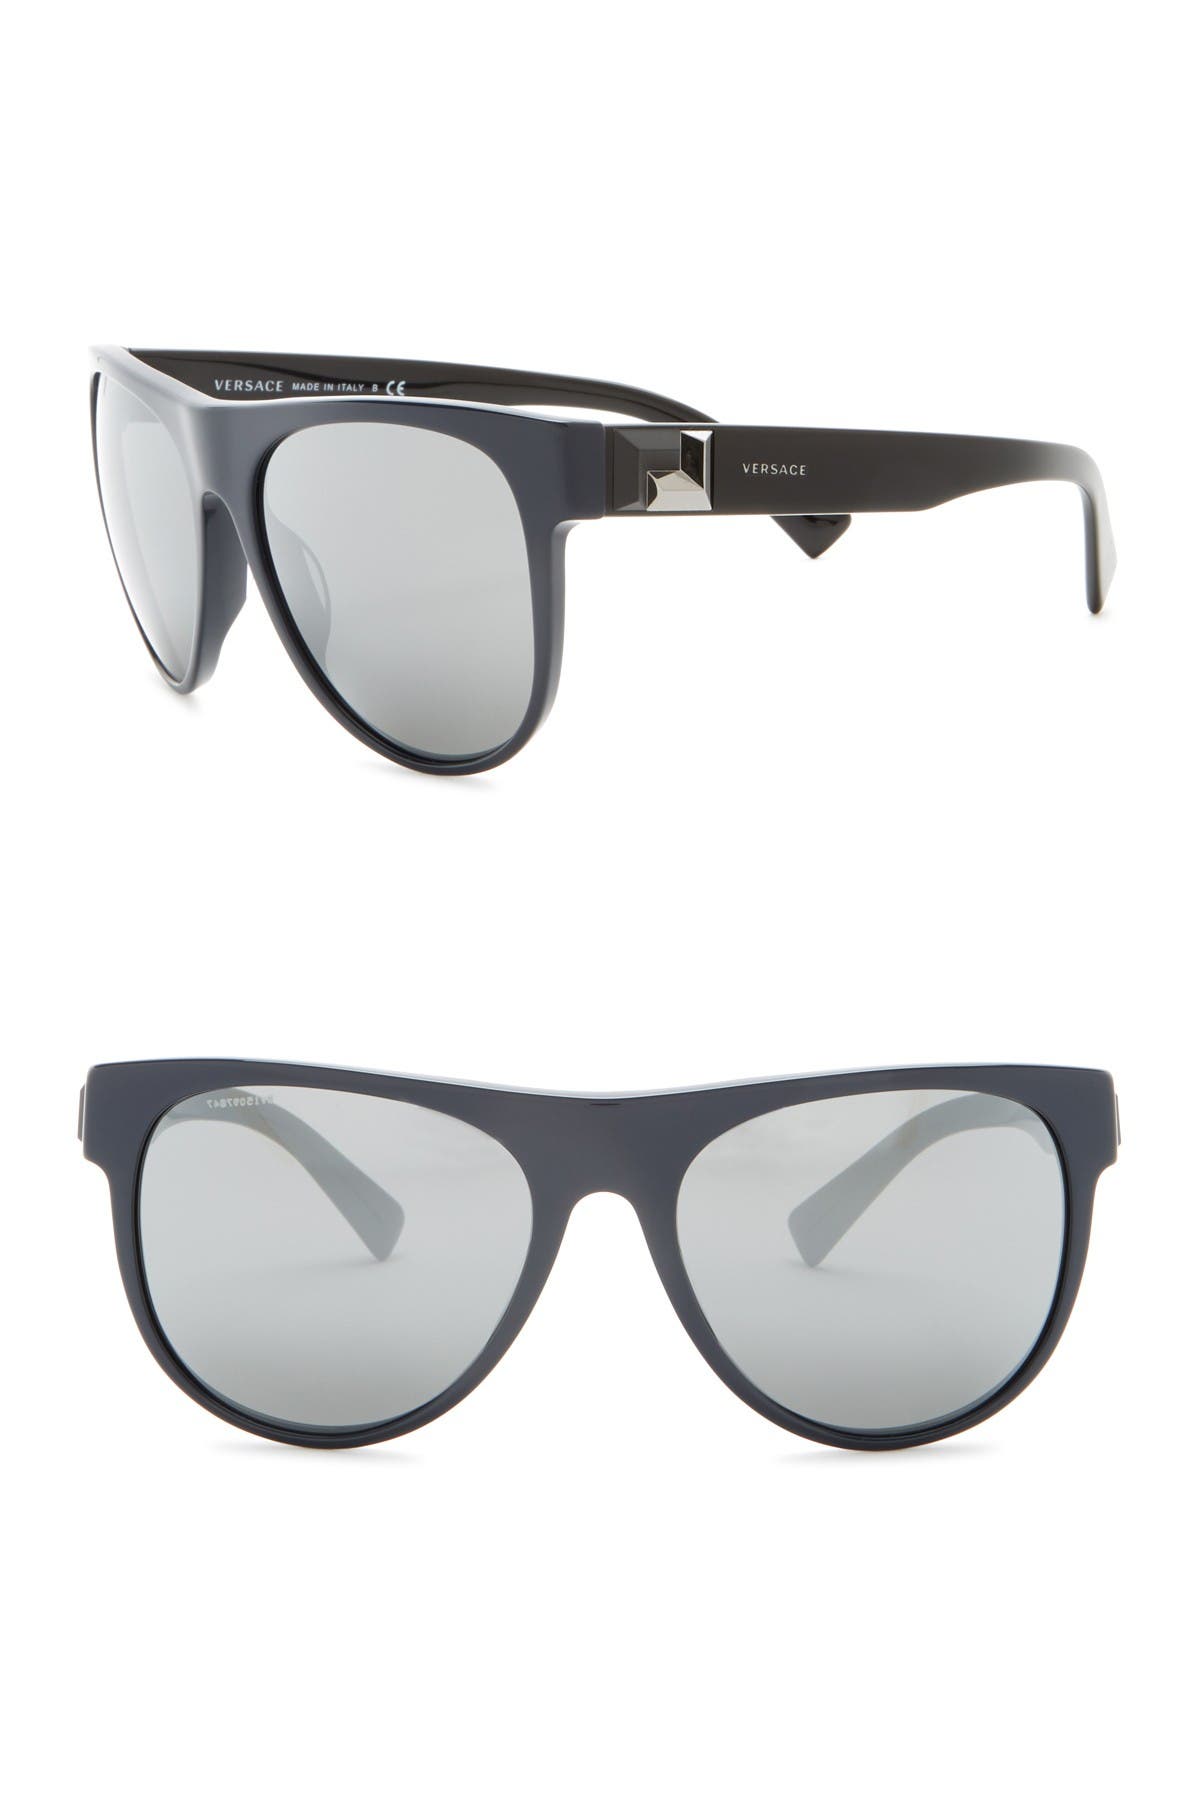 Versace | 57mm Square Sunglasses 